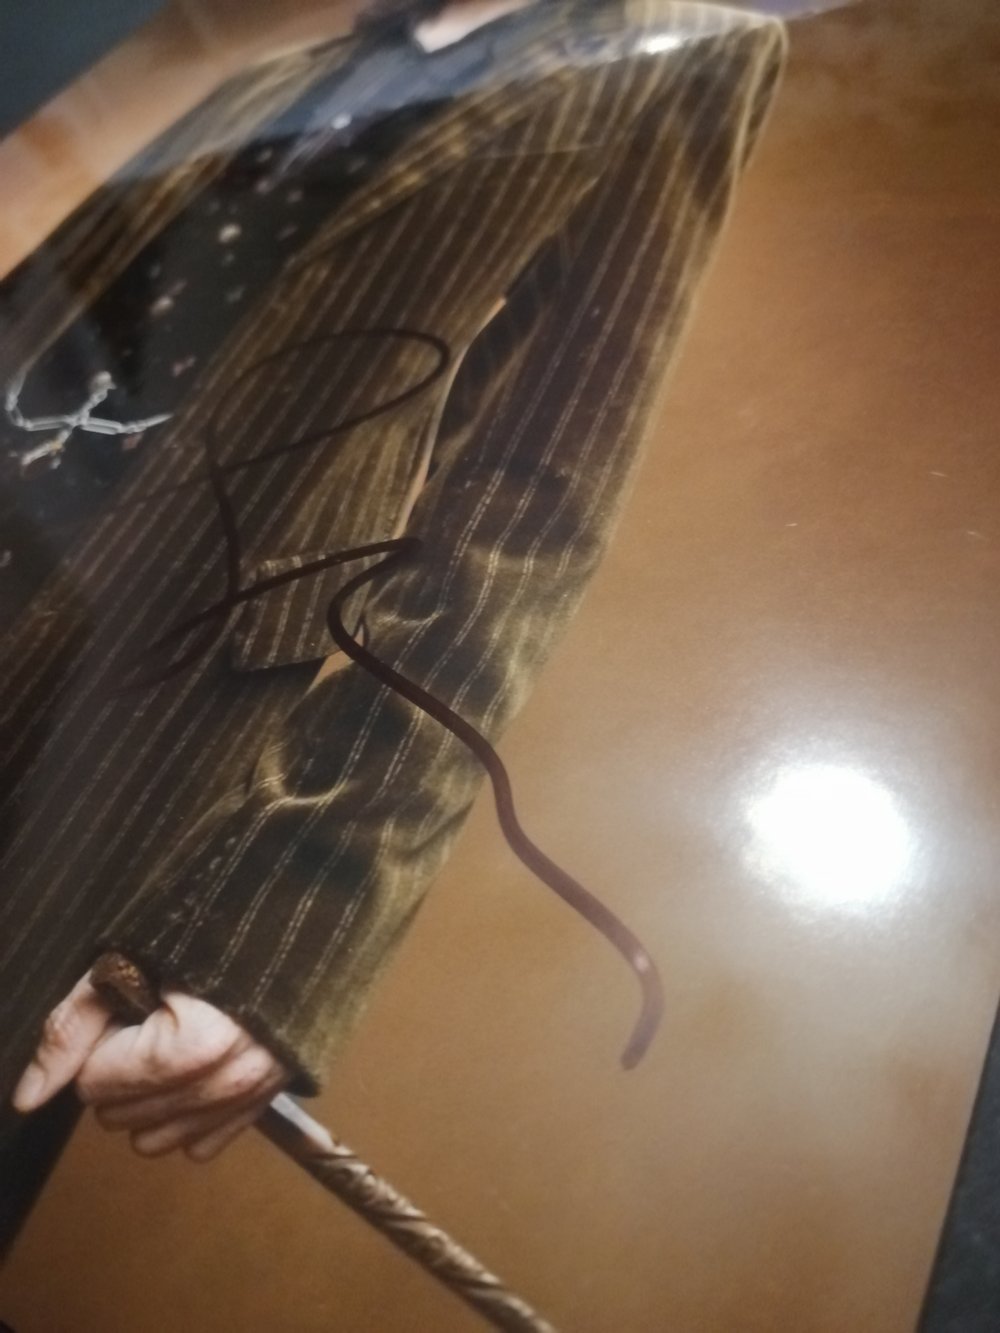 Gary Oldman Sirius Black 10x8 photo Signed